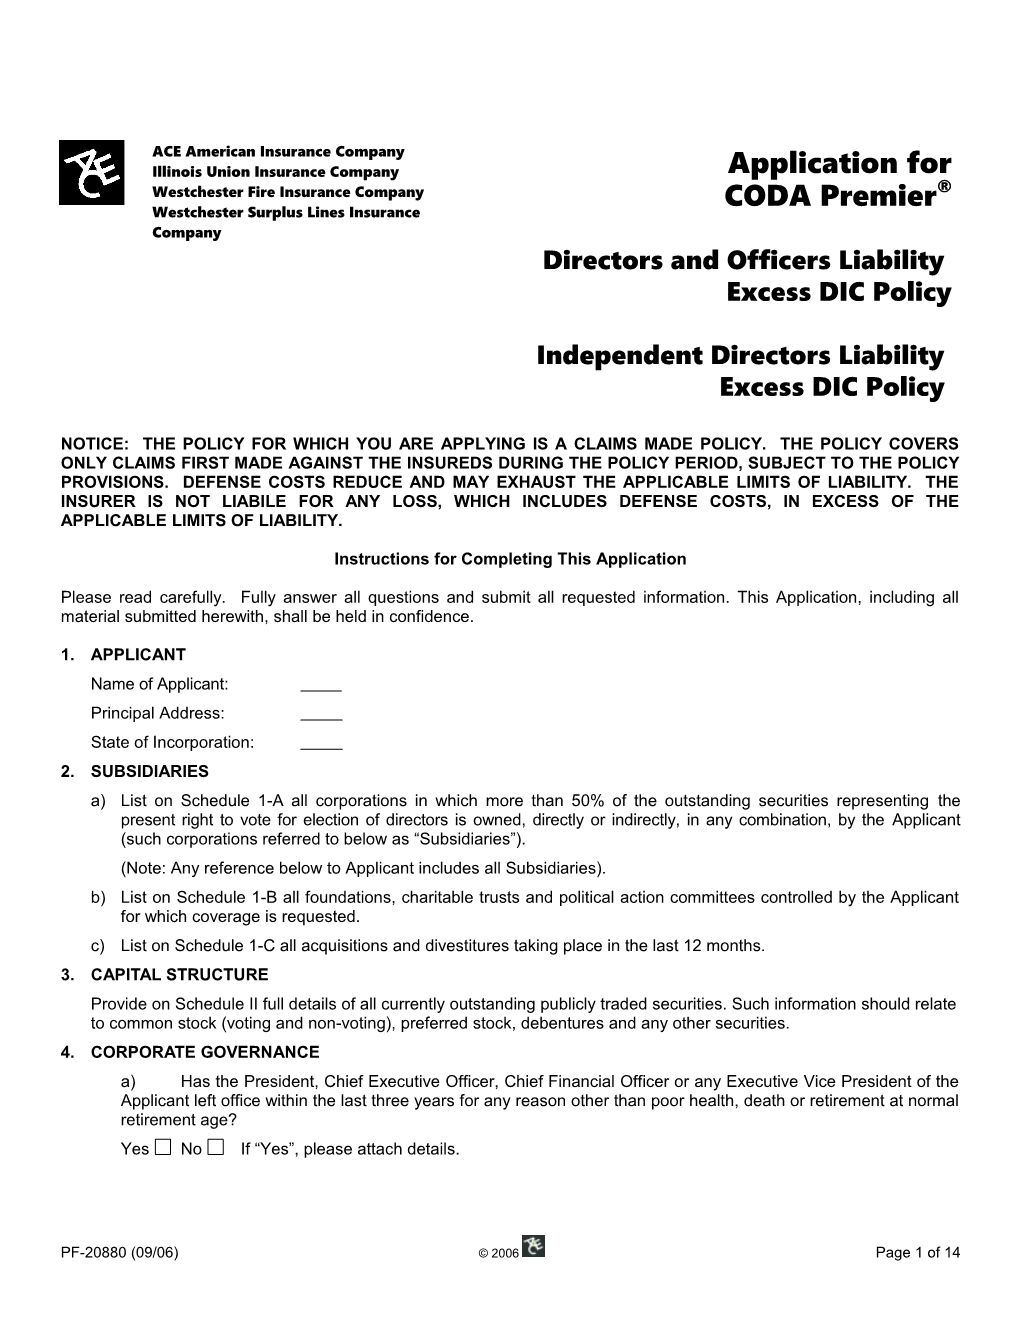 CODA Premier D&O Liability Excess DIC Application